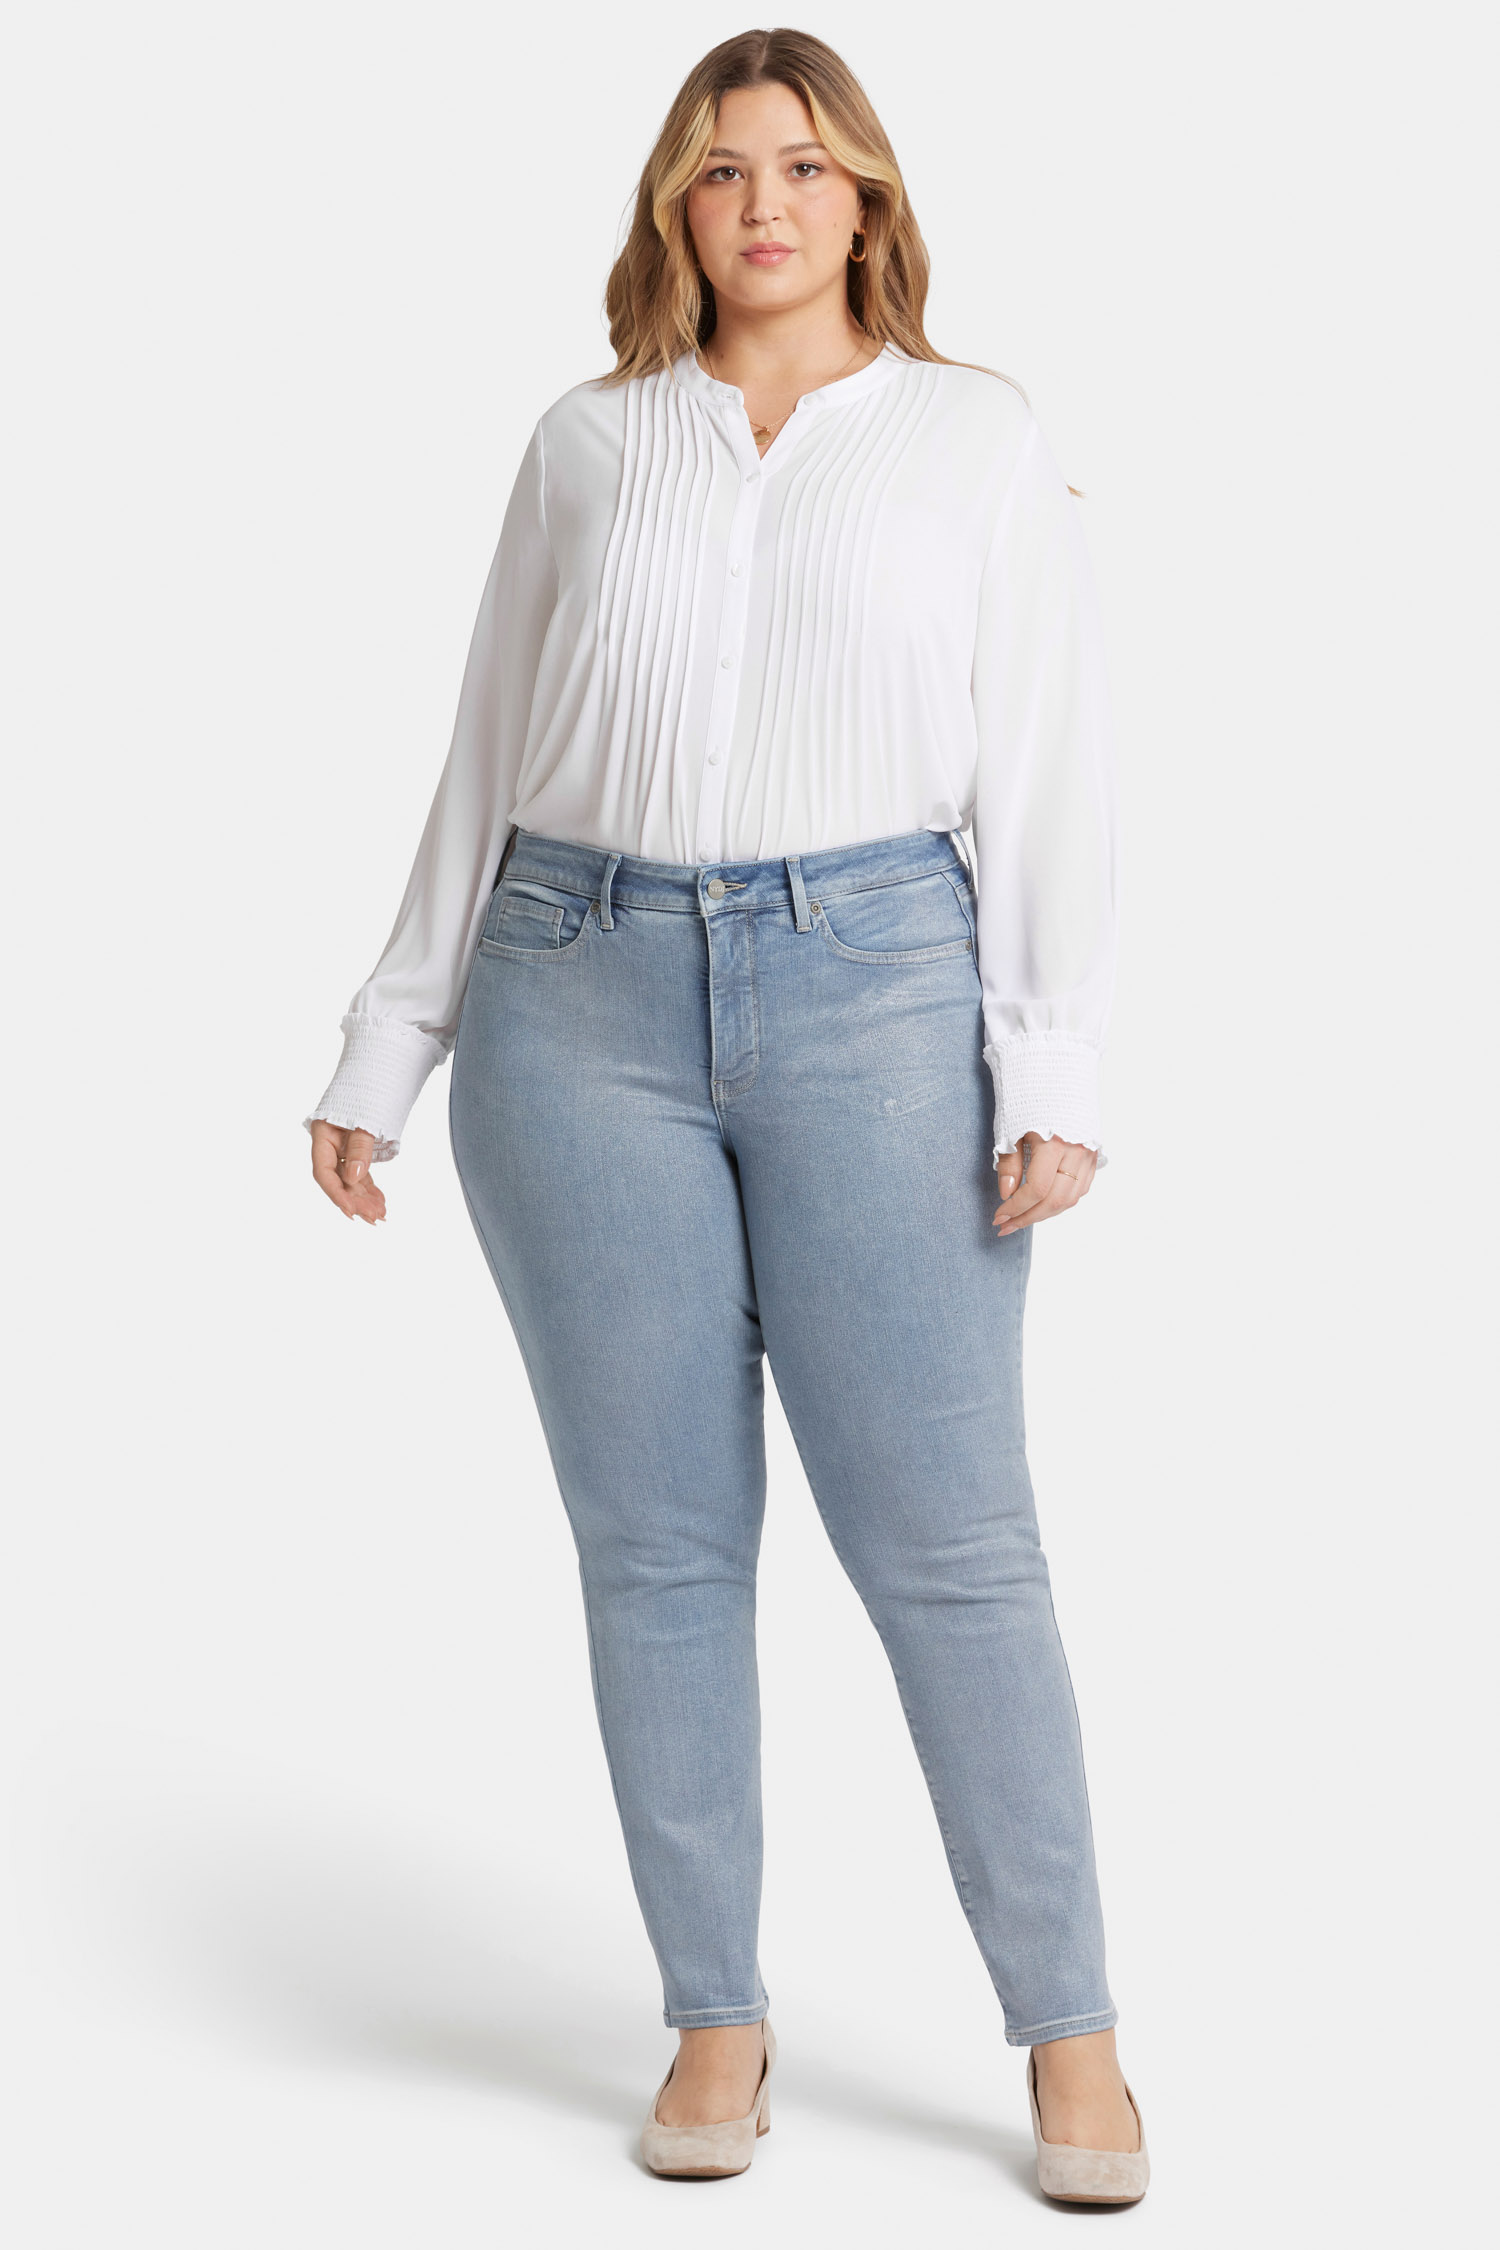 Women's LEE Denim Mid-Rise Stretch Capri Bright White Jeans Plus